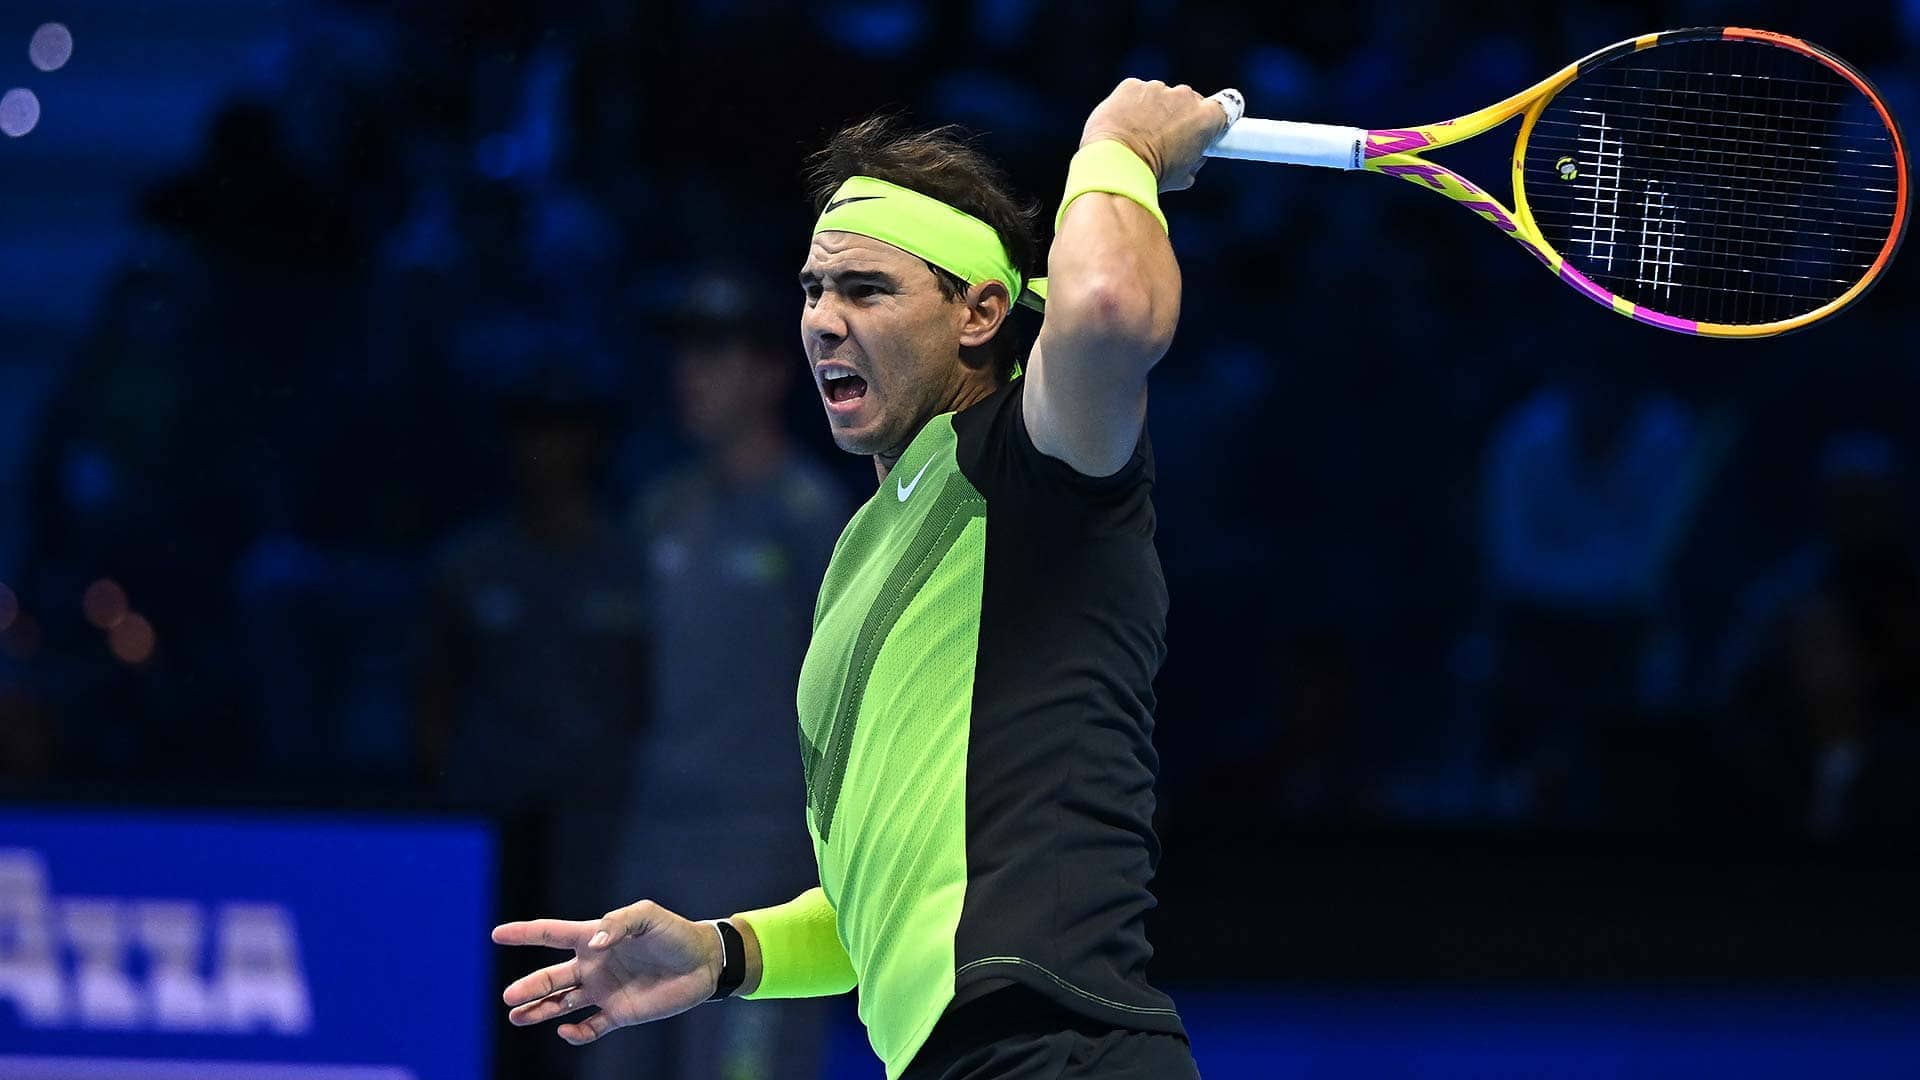 Rafael Nadal will face Casper Ruud in his final Green Group match in Turin.